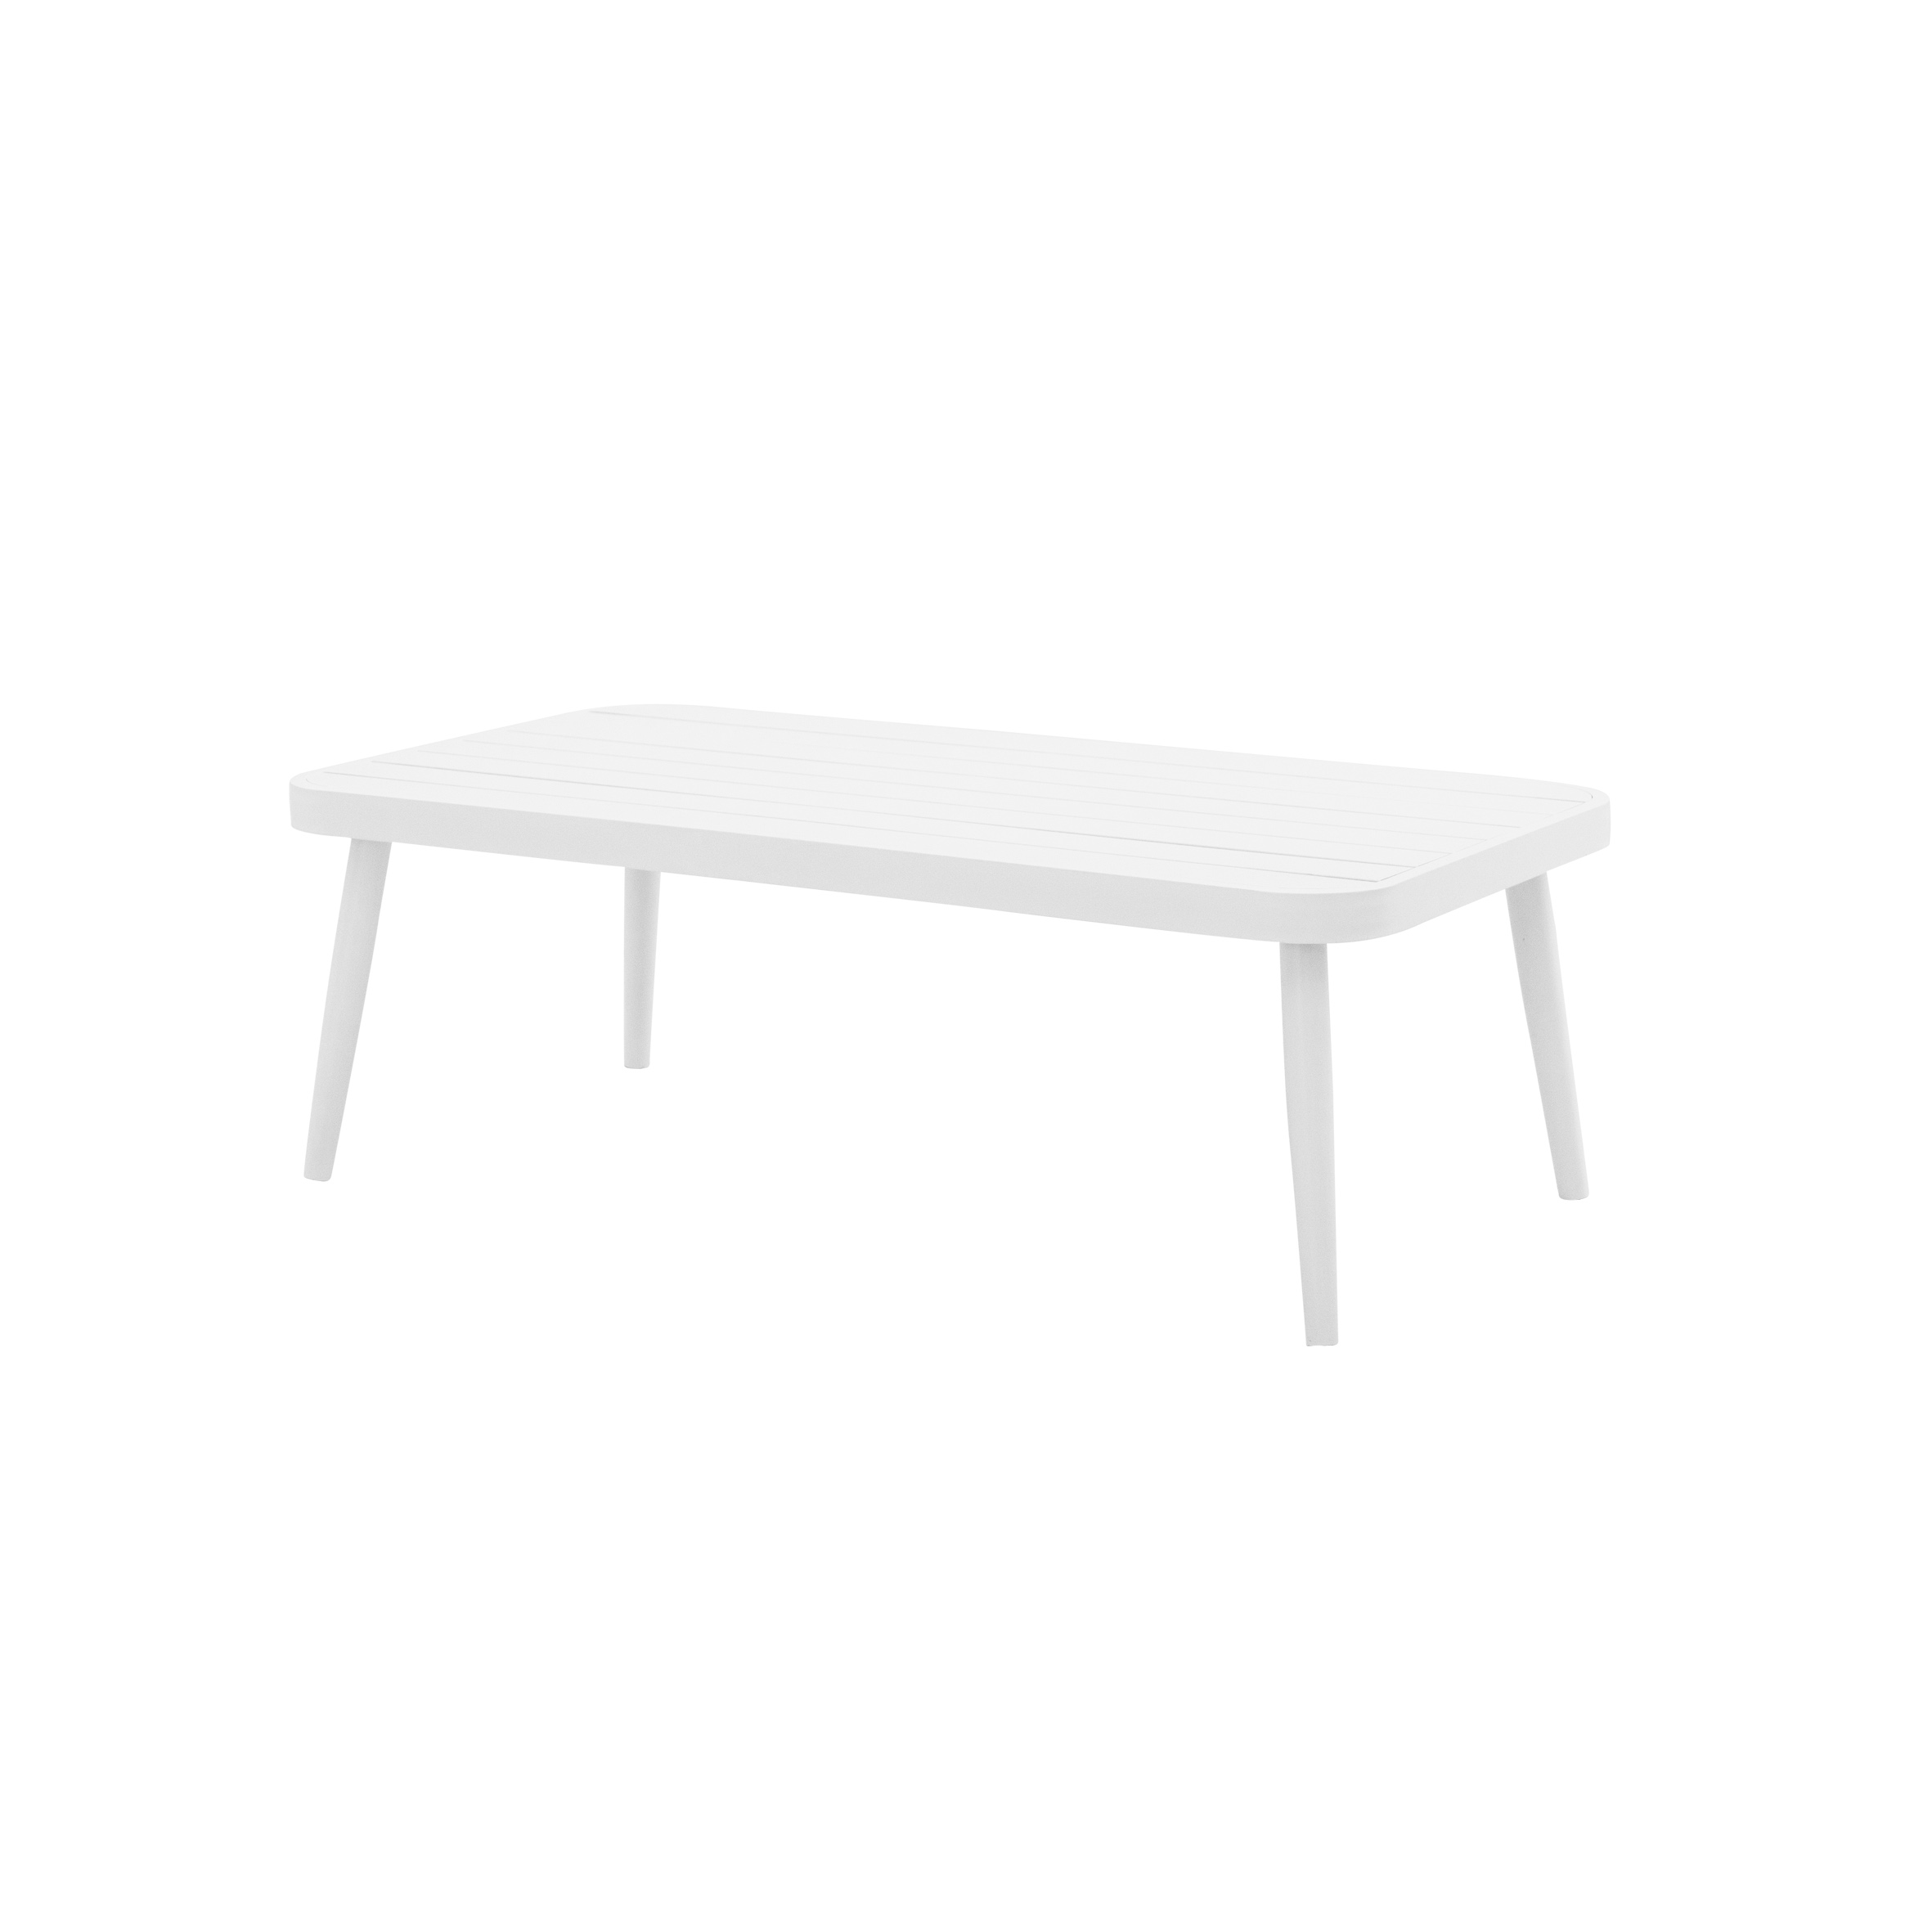 Leon alu. coffee table (KD) Featured Image